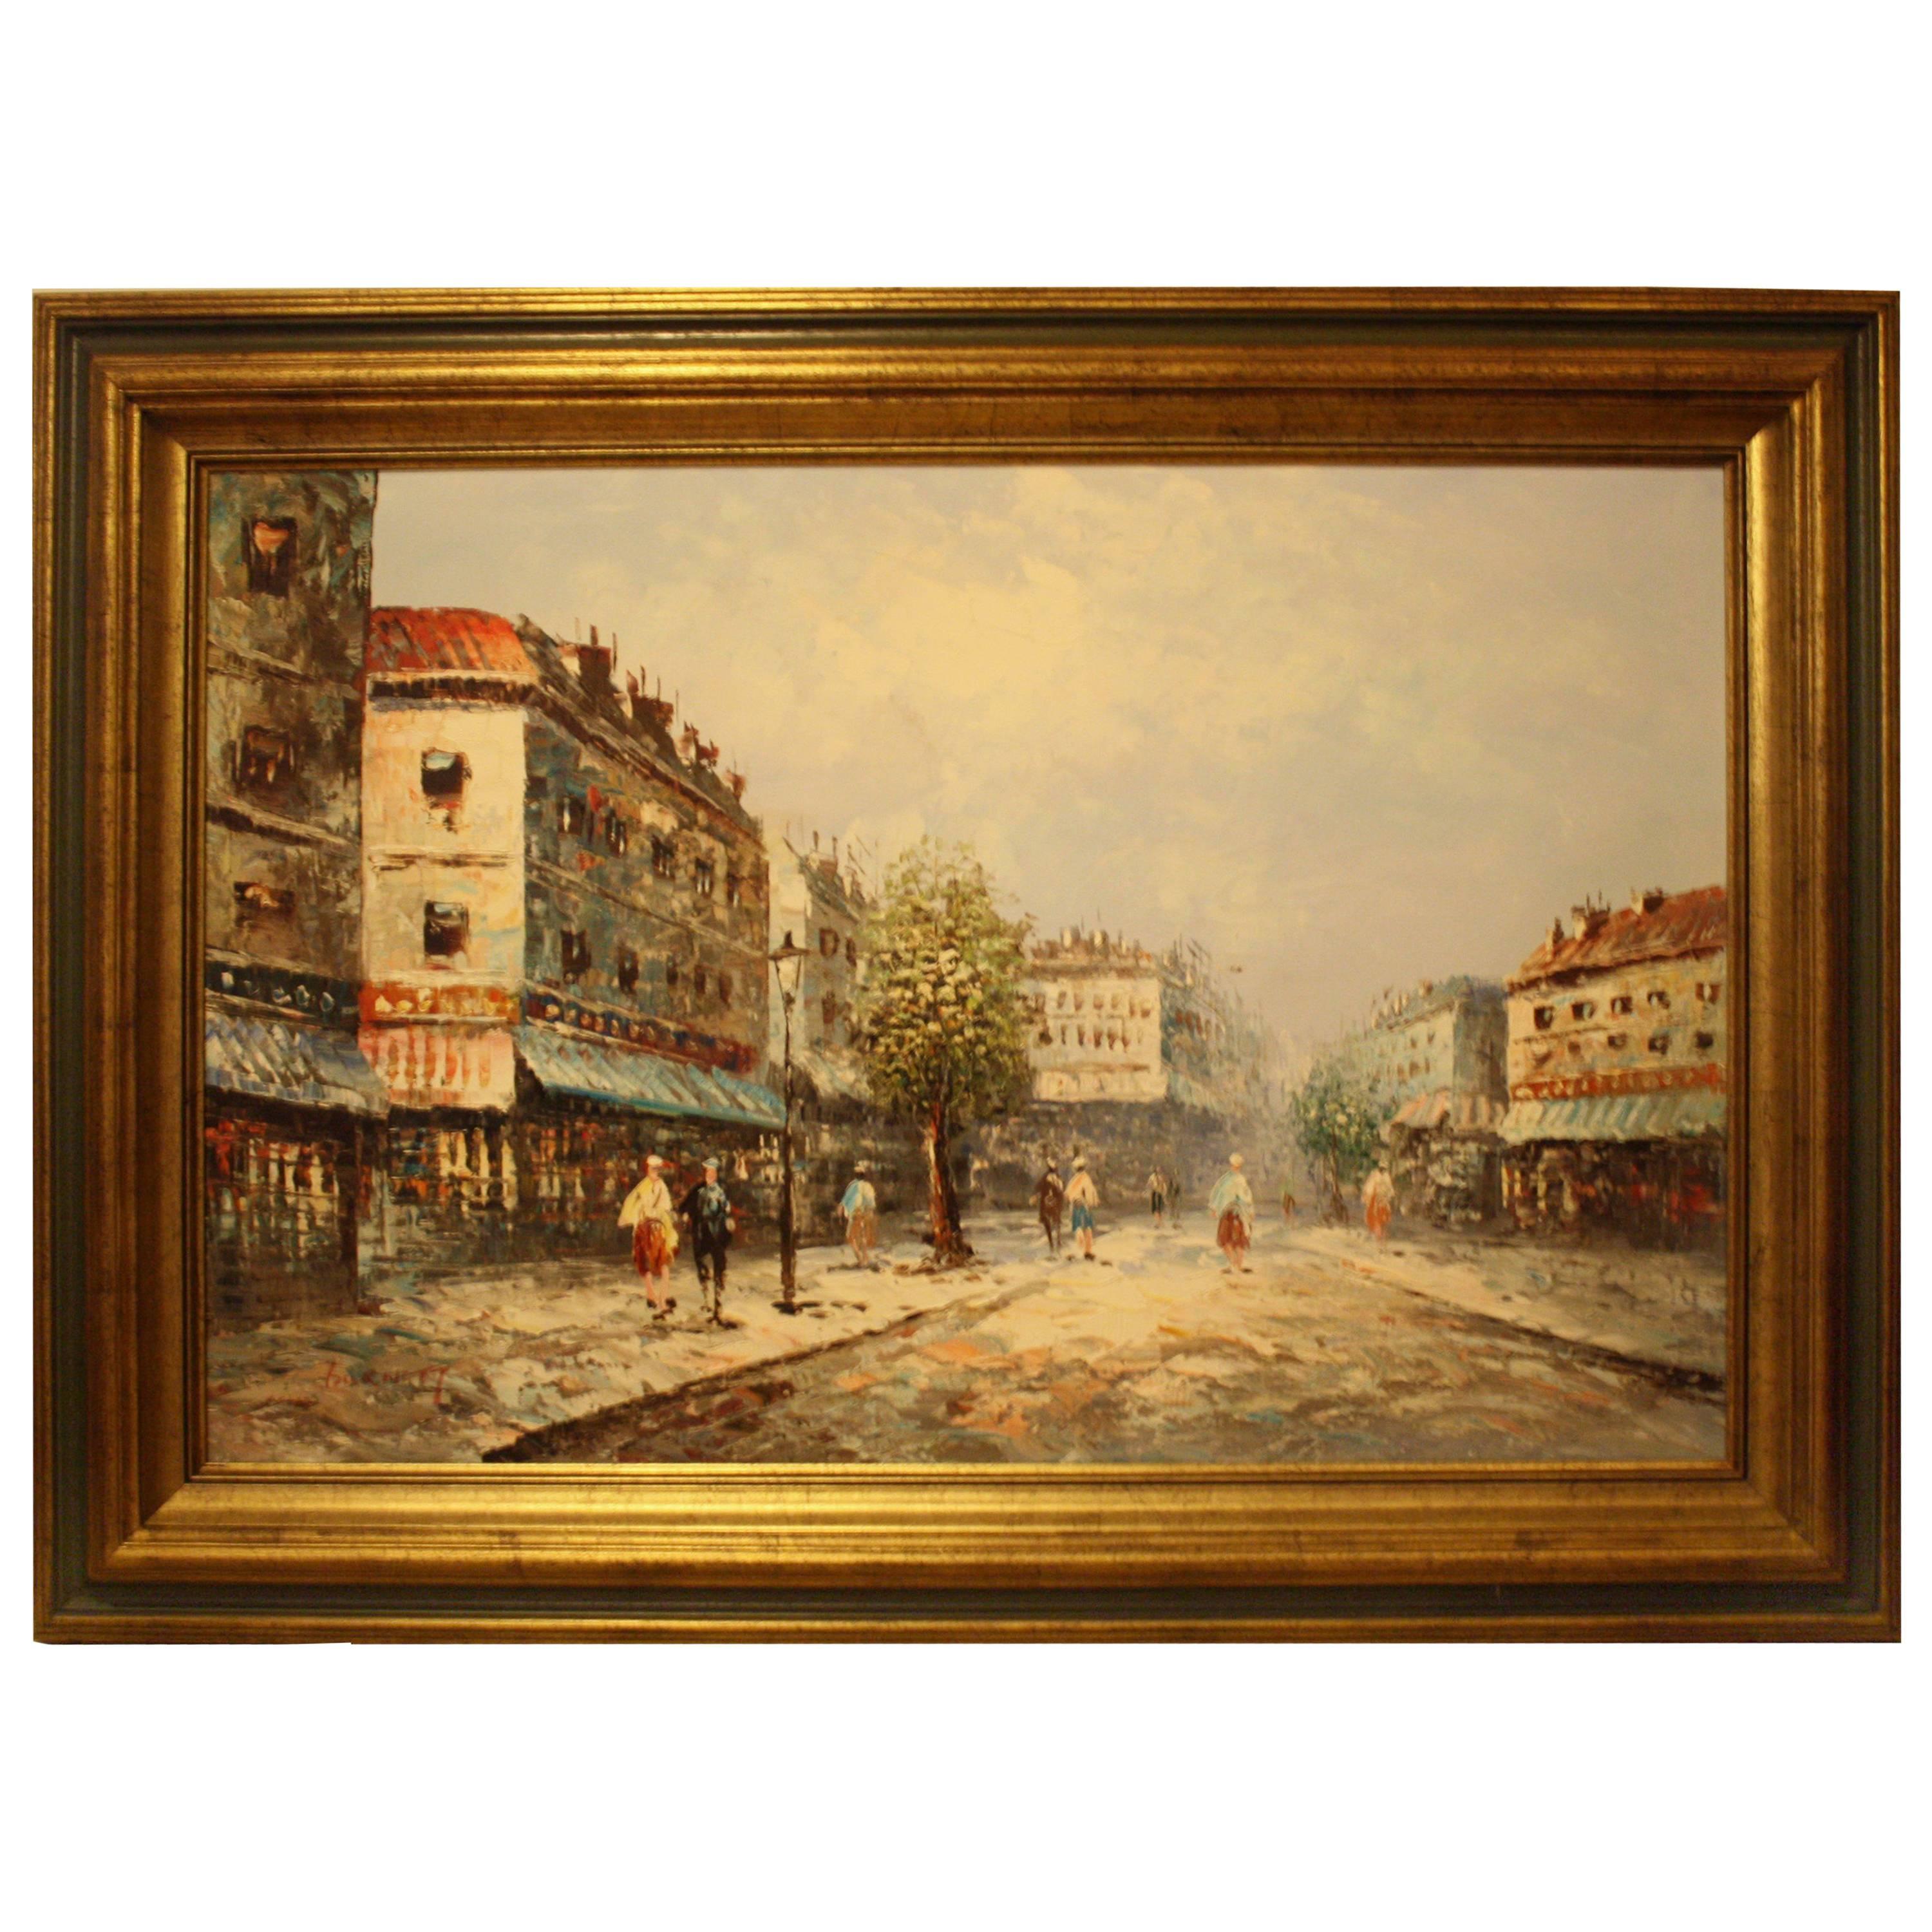 C. Burnett, Parisian street scene oil on canvas late 19th century For Sale